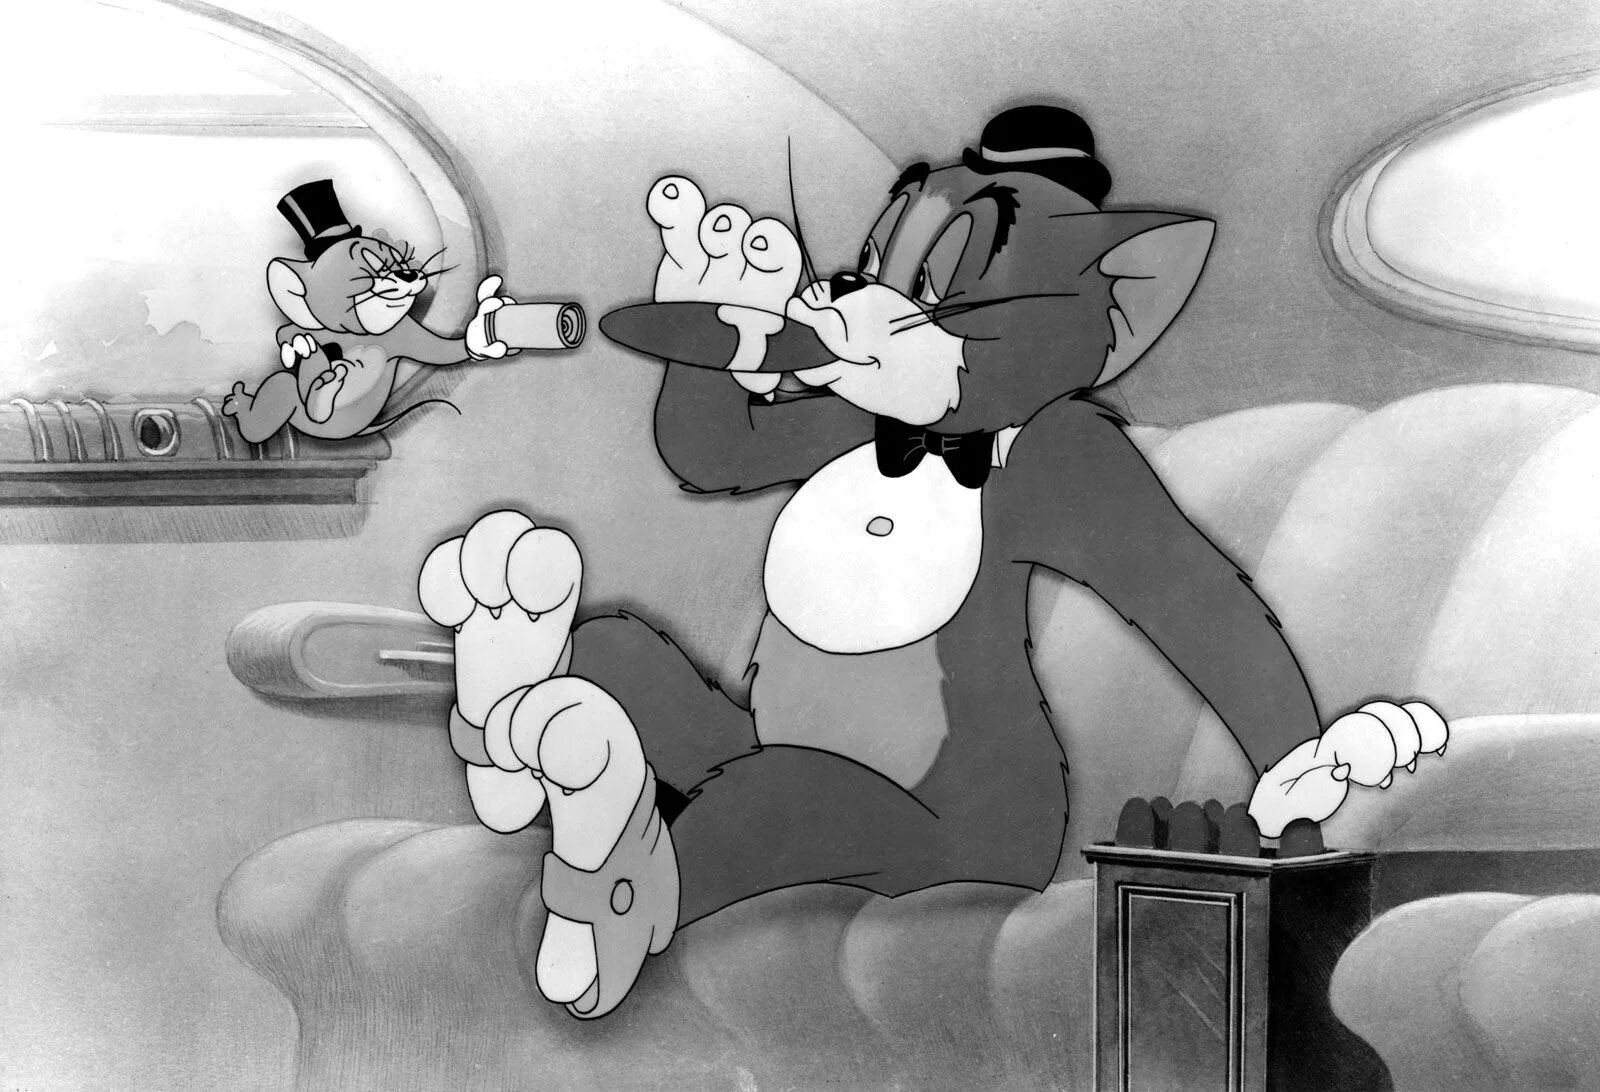 Tom and Jerry 1960. Tom and Jerry 1930. Том и Джерри том с сигарой. Том с сигаретой том и Джерри.